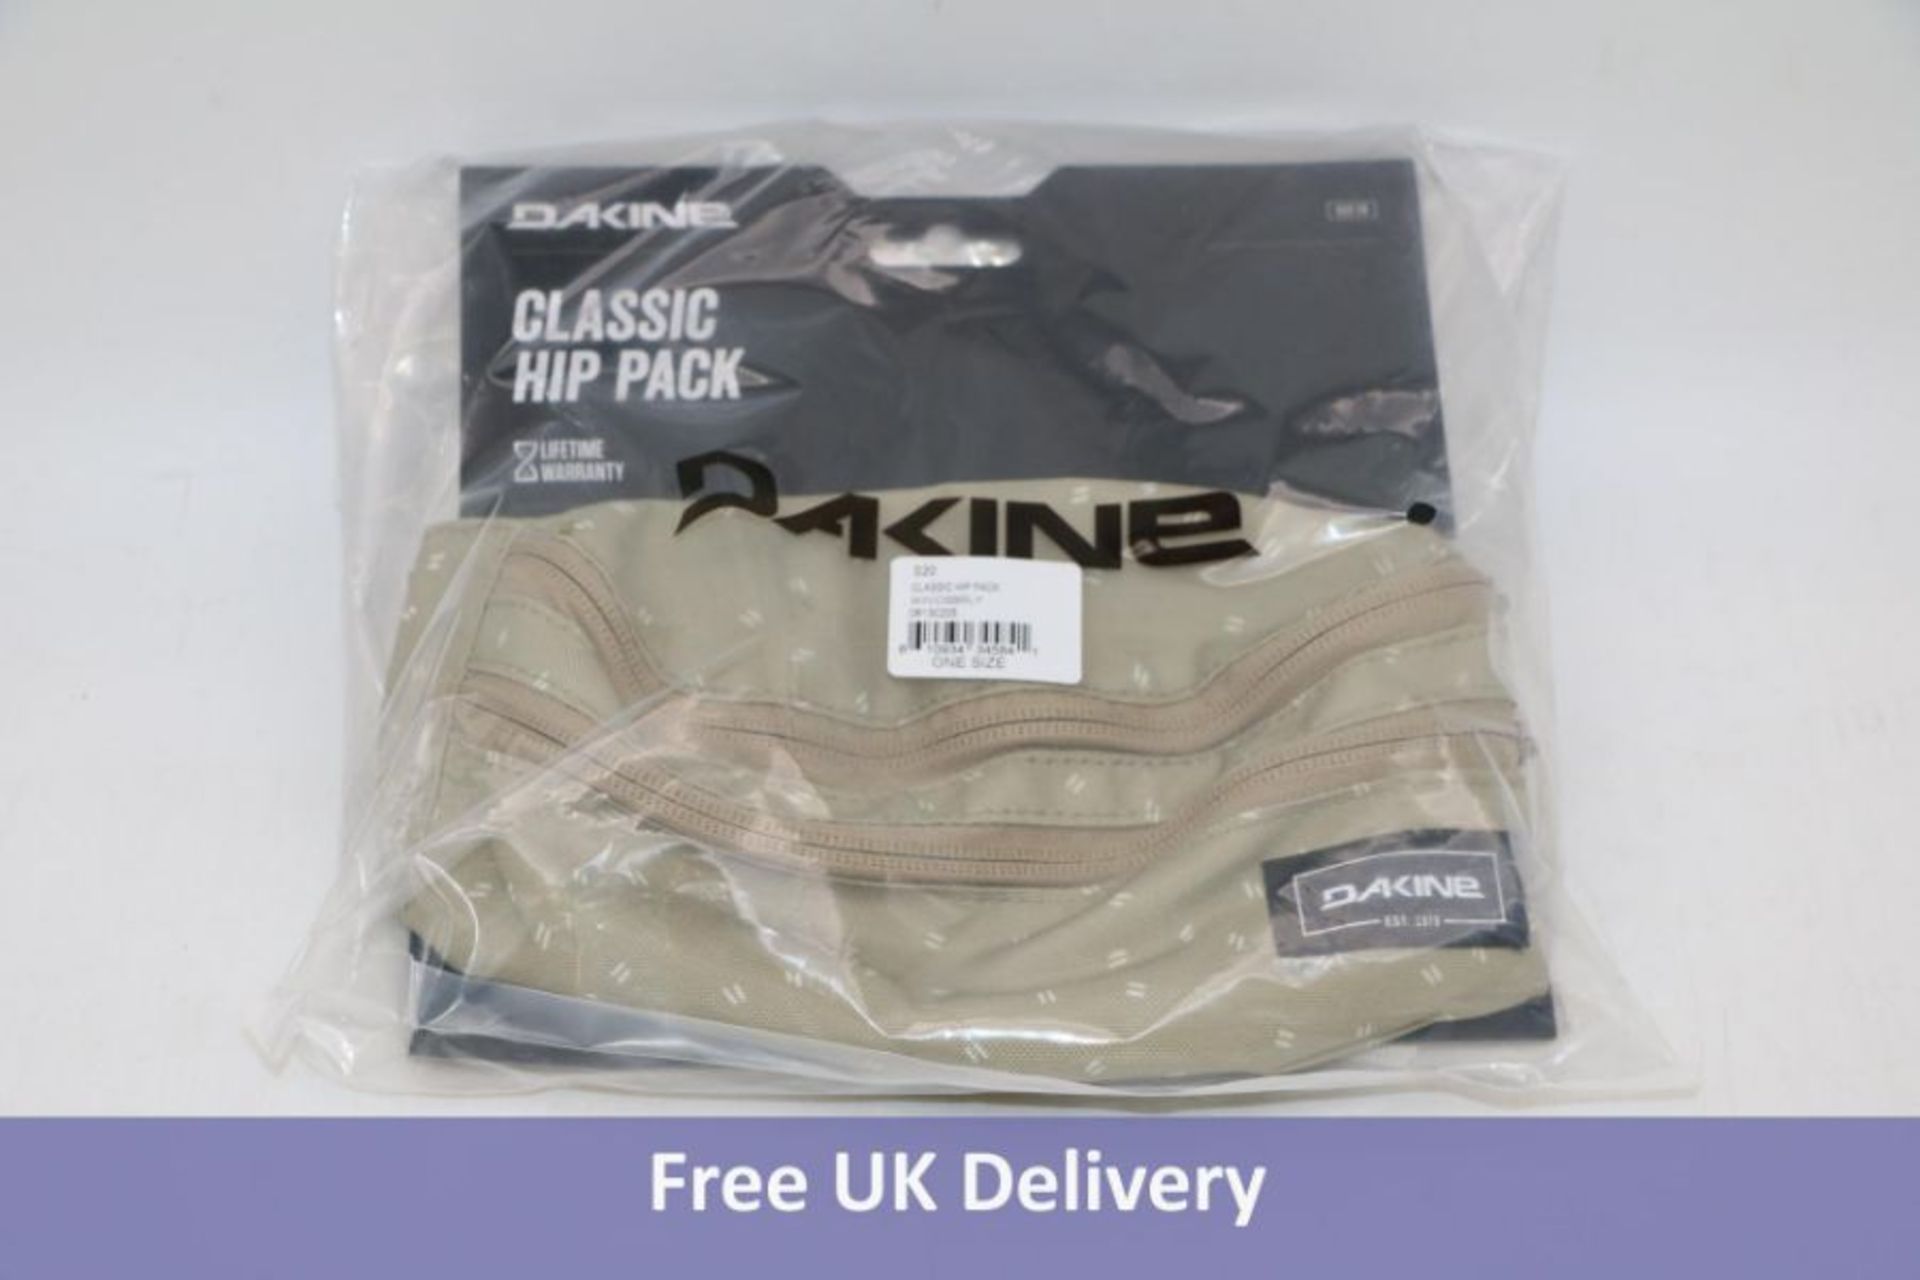 Four Dakine Classic Hip Packs to include x3 Dash Barley, One Size, x1 Dakine Unisex, Black, One Size